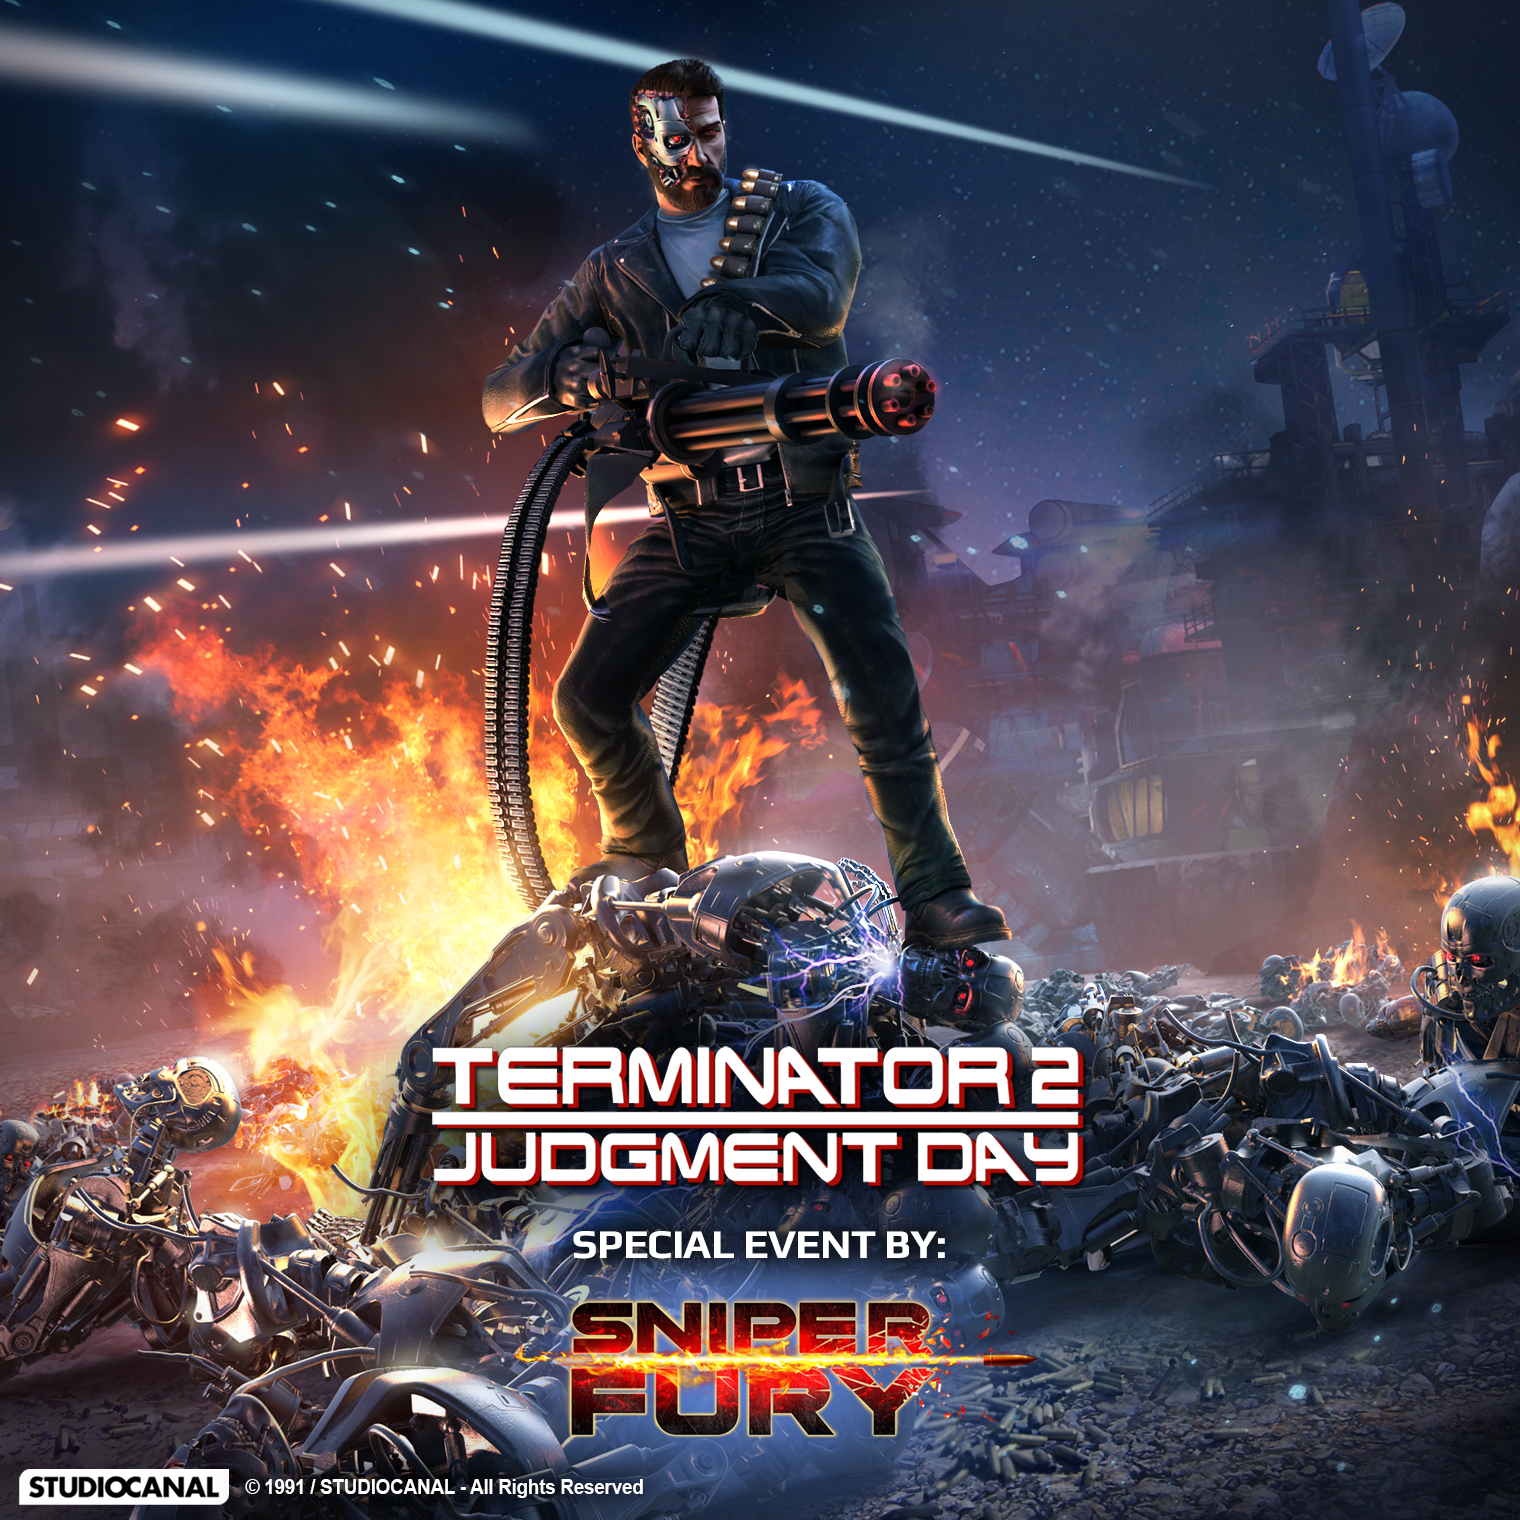 Terminator judgment day игра. Терминатор. Терминатор 2. Терминатор игра. Игра Терминатор 2 Судный день.